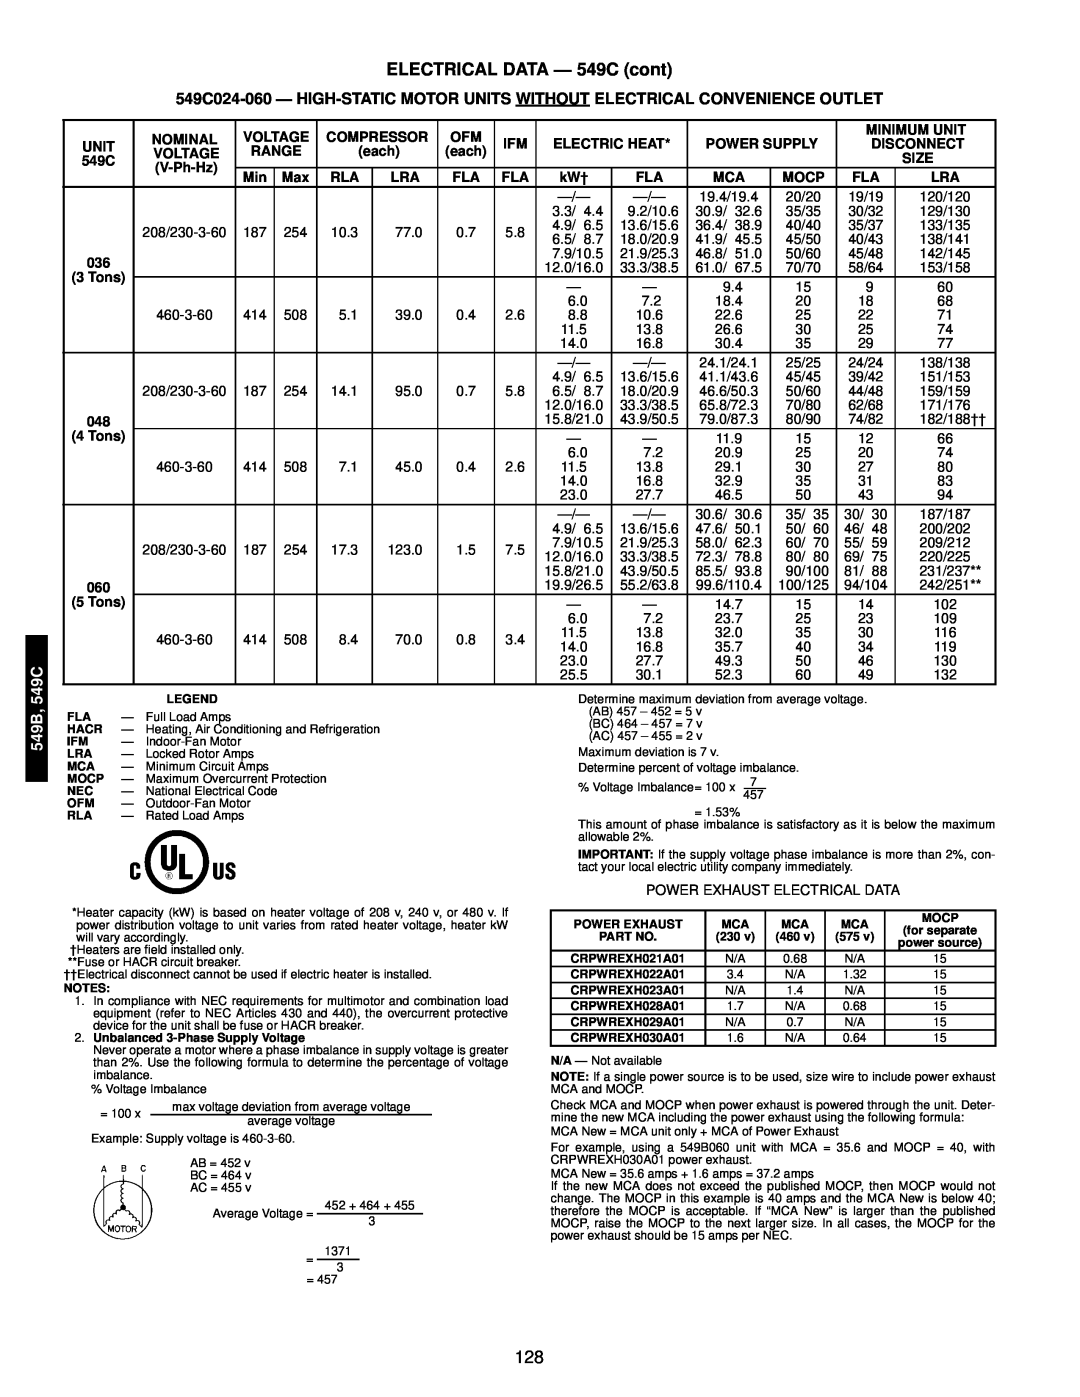 Bryant manual ELECTRICAL DATA — 549C cont, 549B 